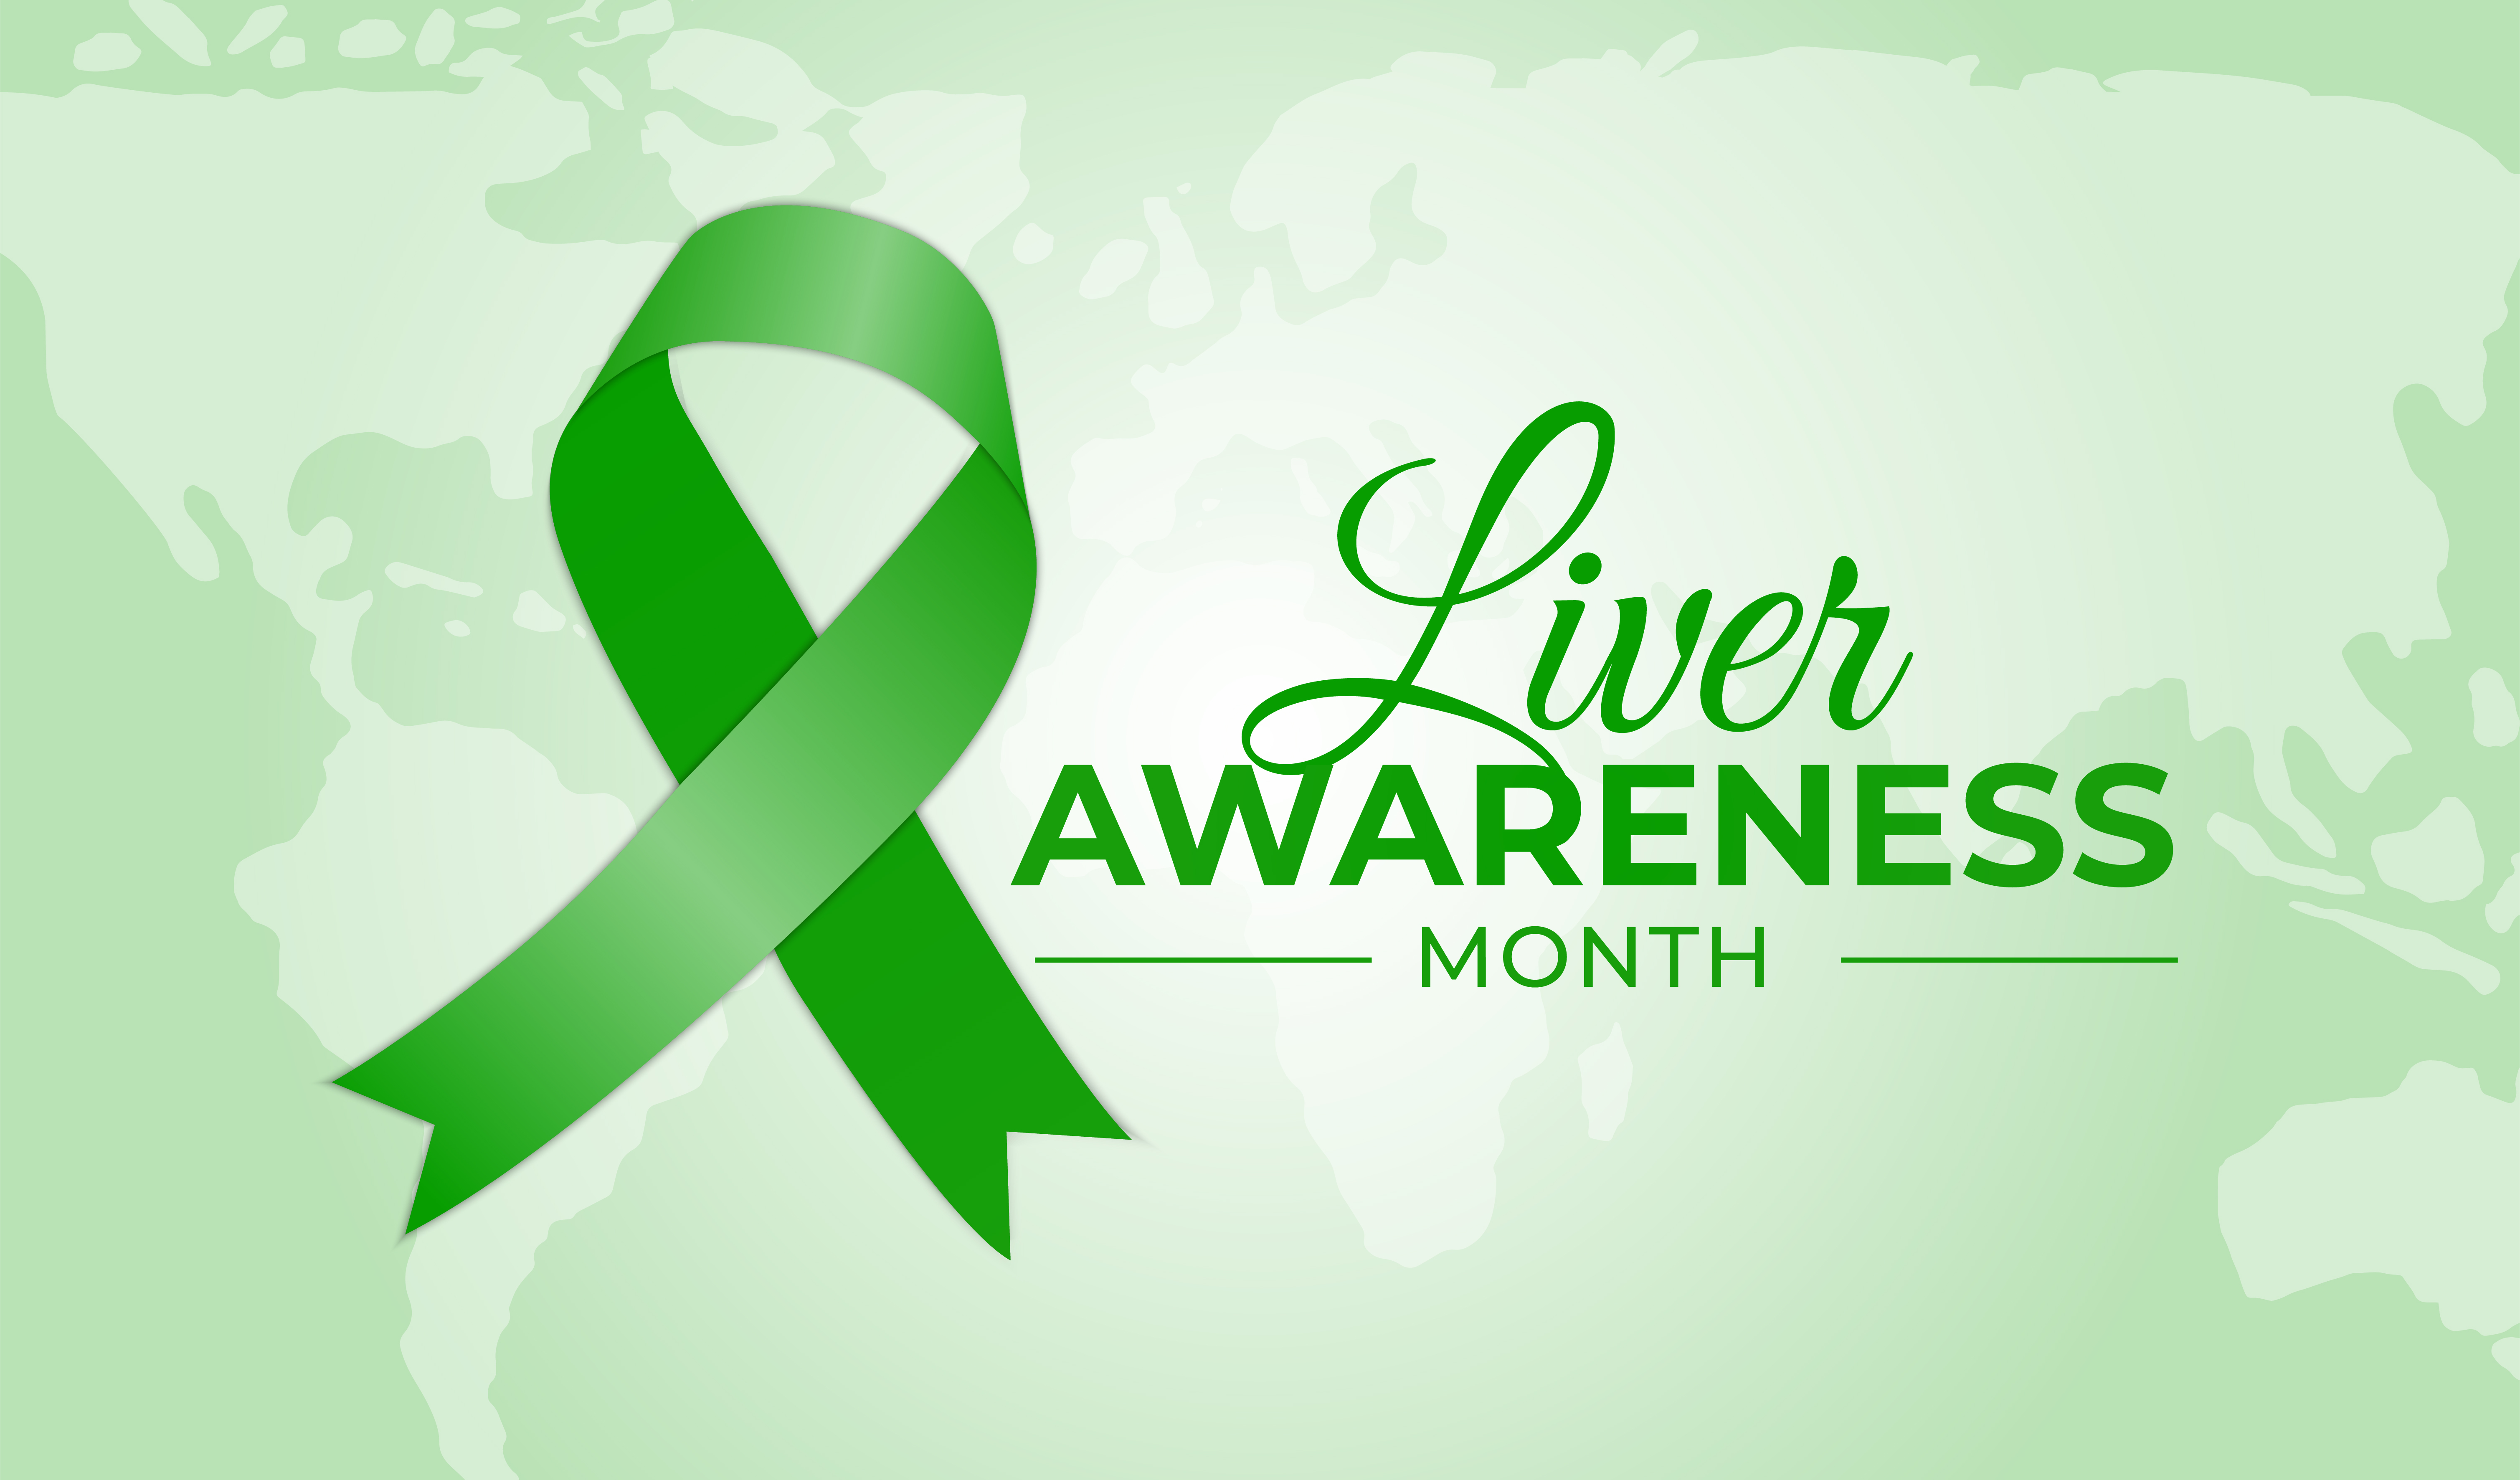 Liver awareness month